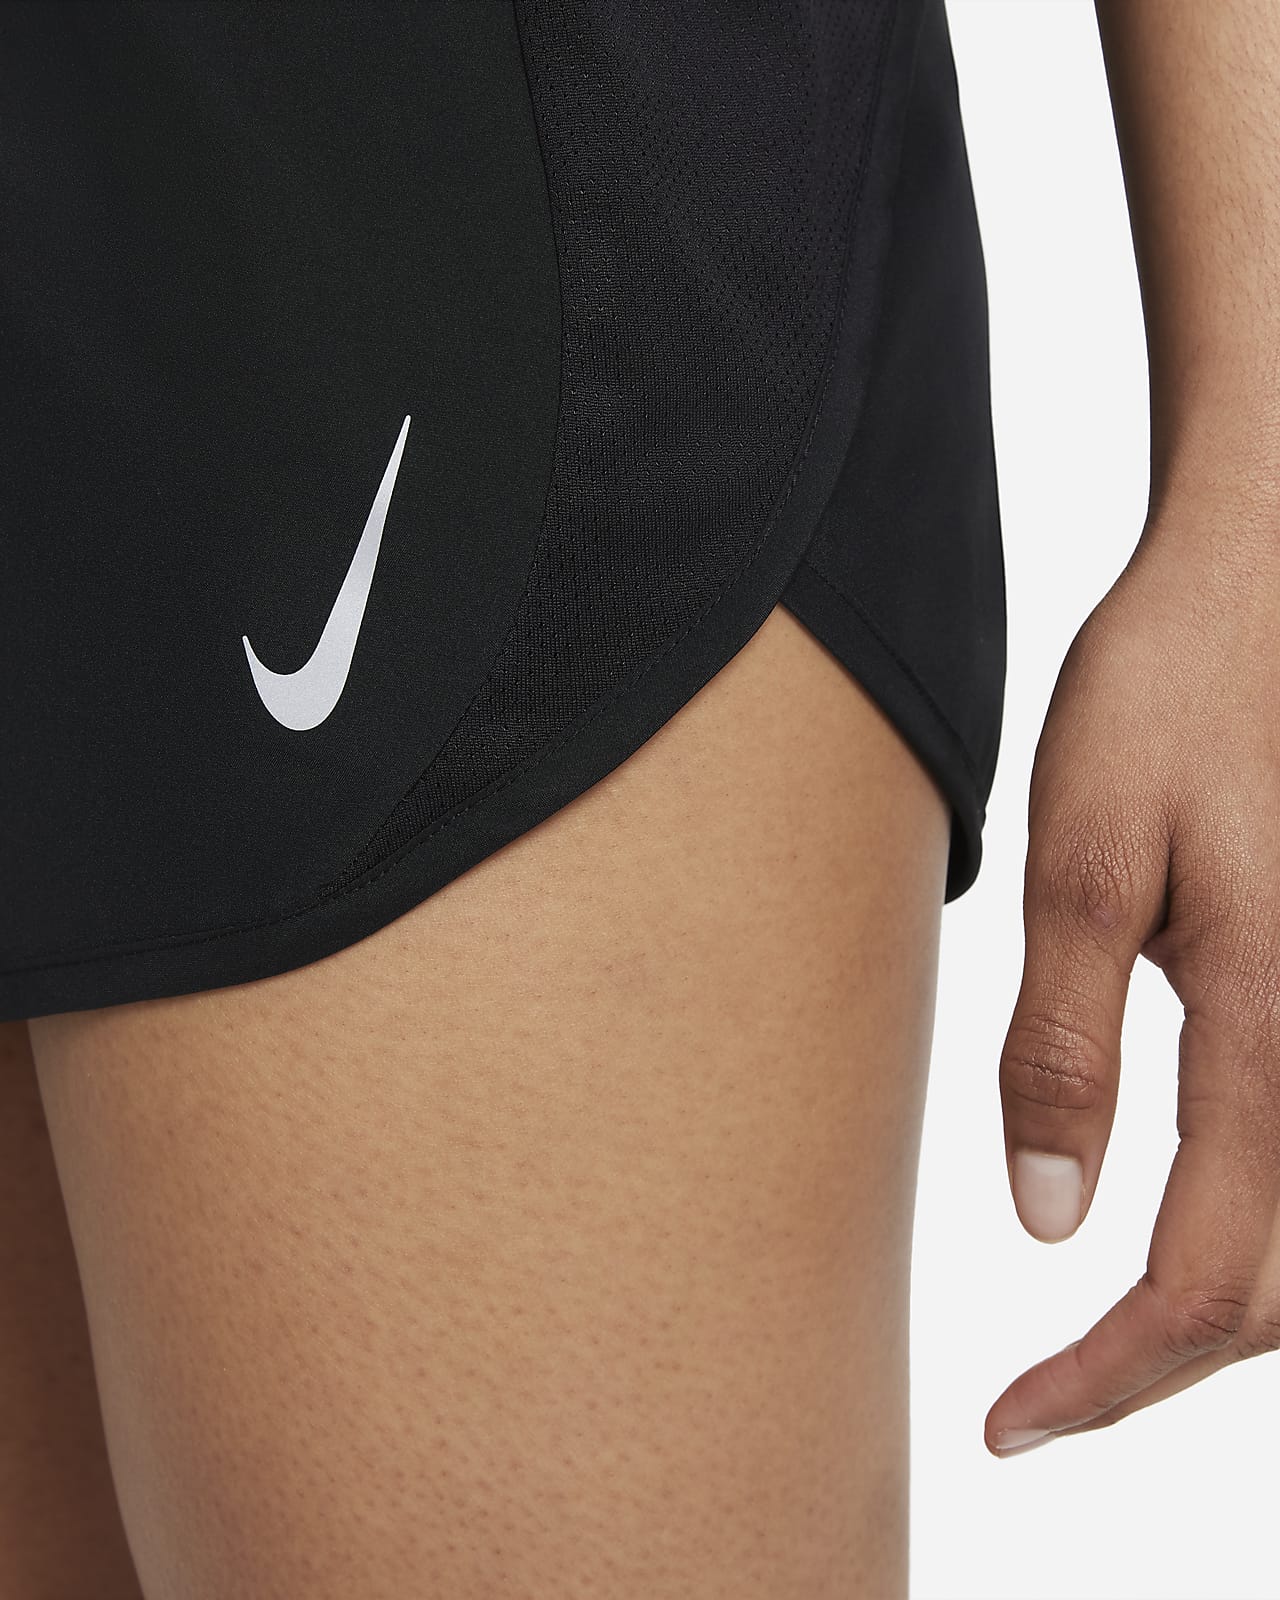 Nike Women's Dry Tempo Shorts, Black/White, XL